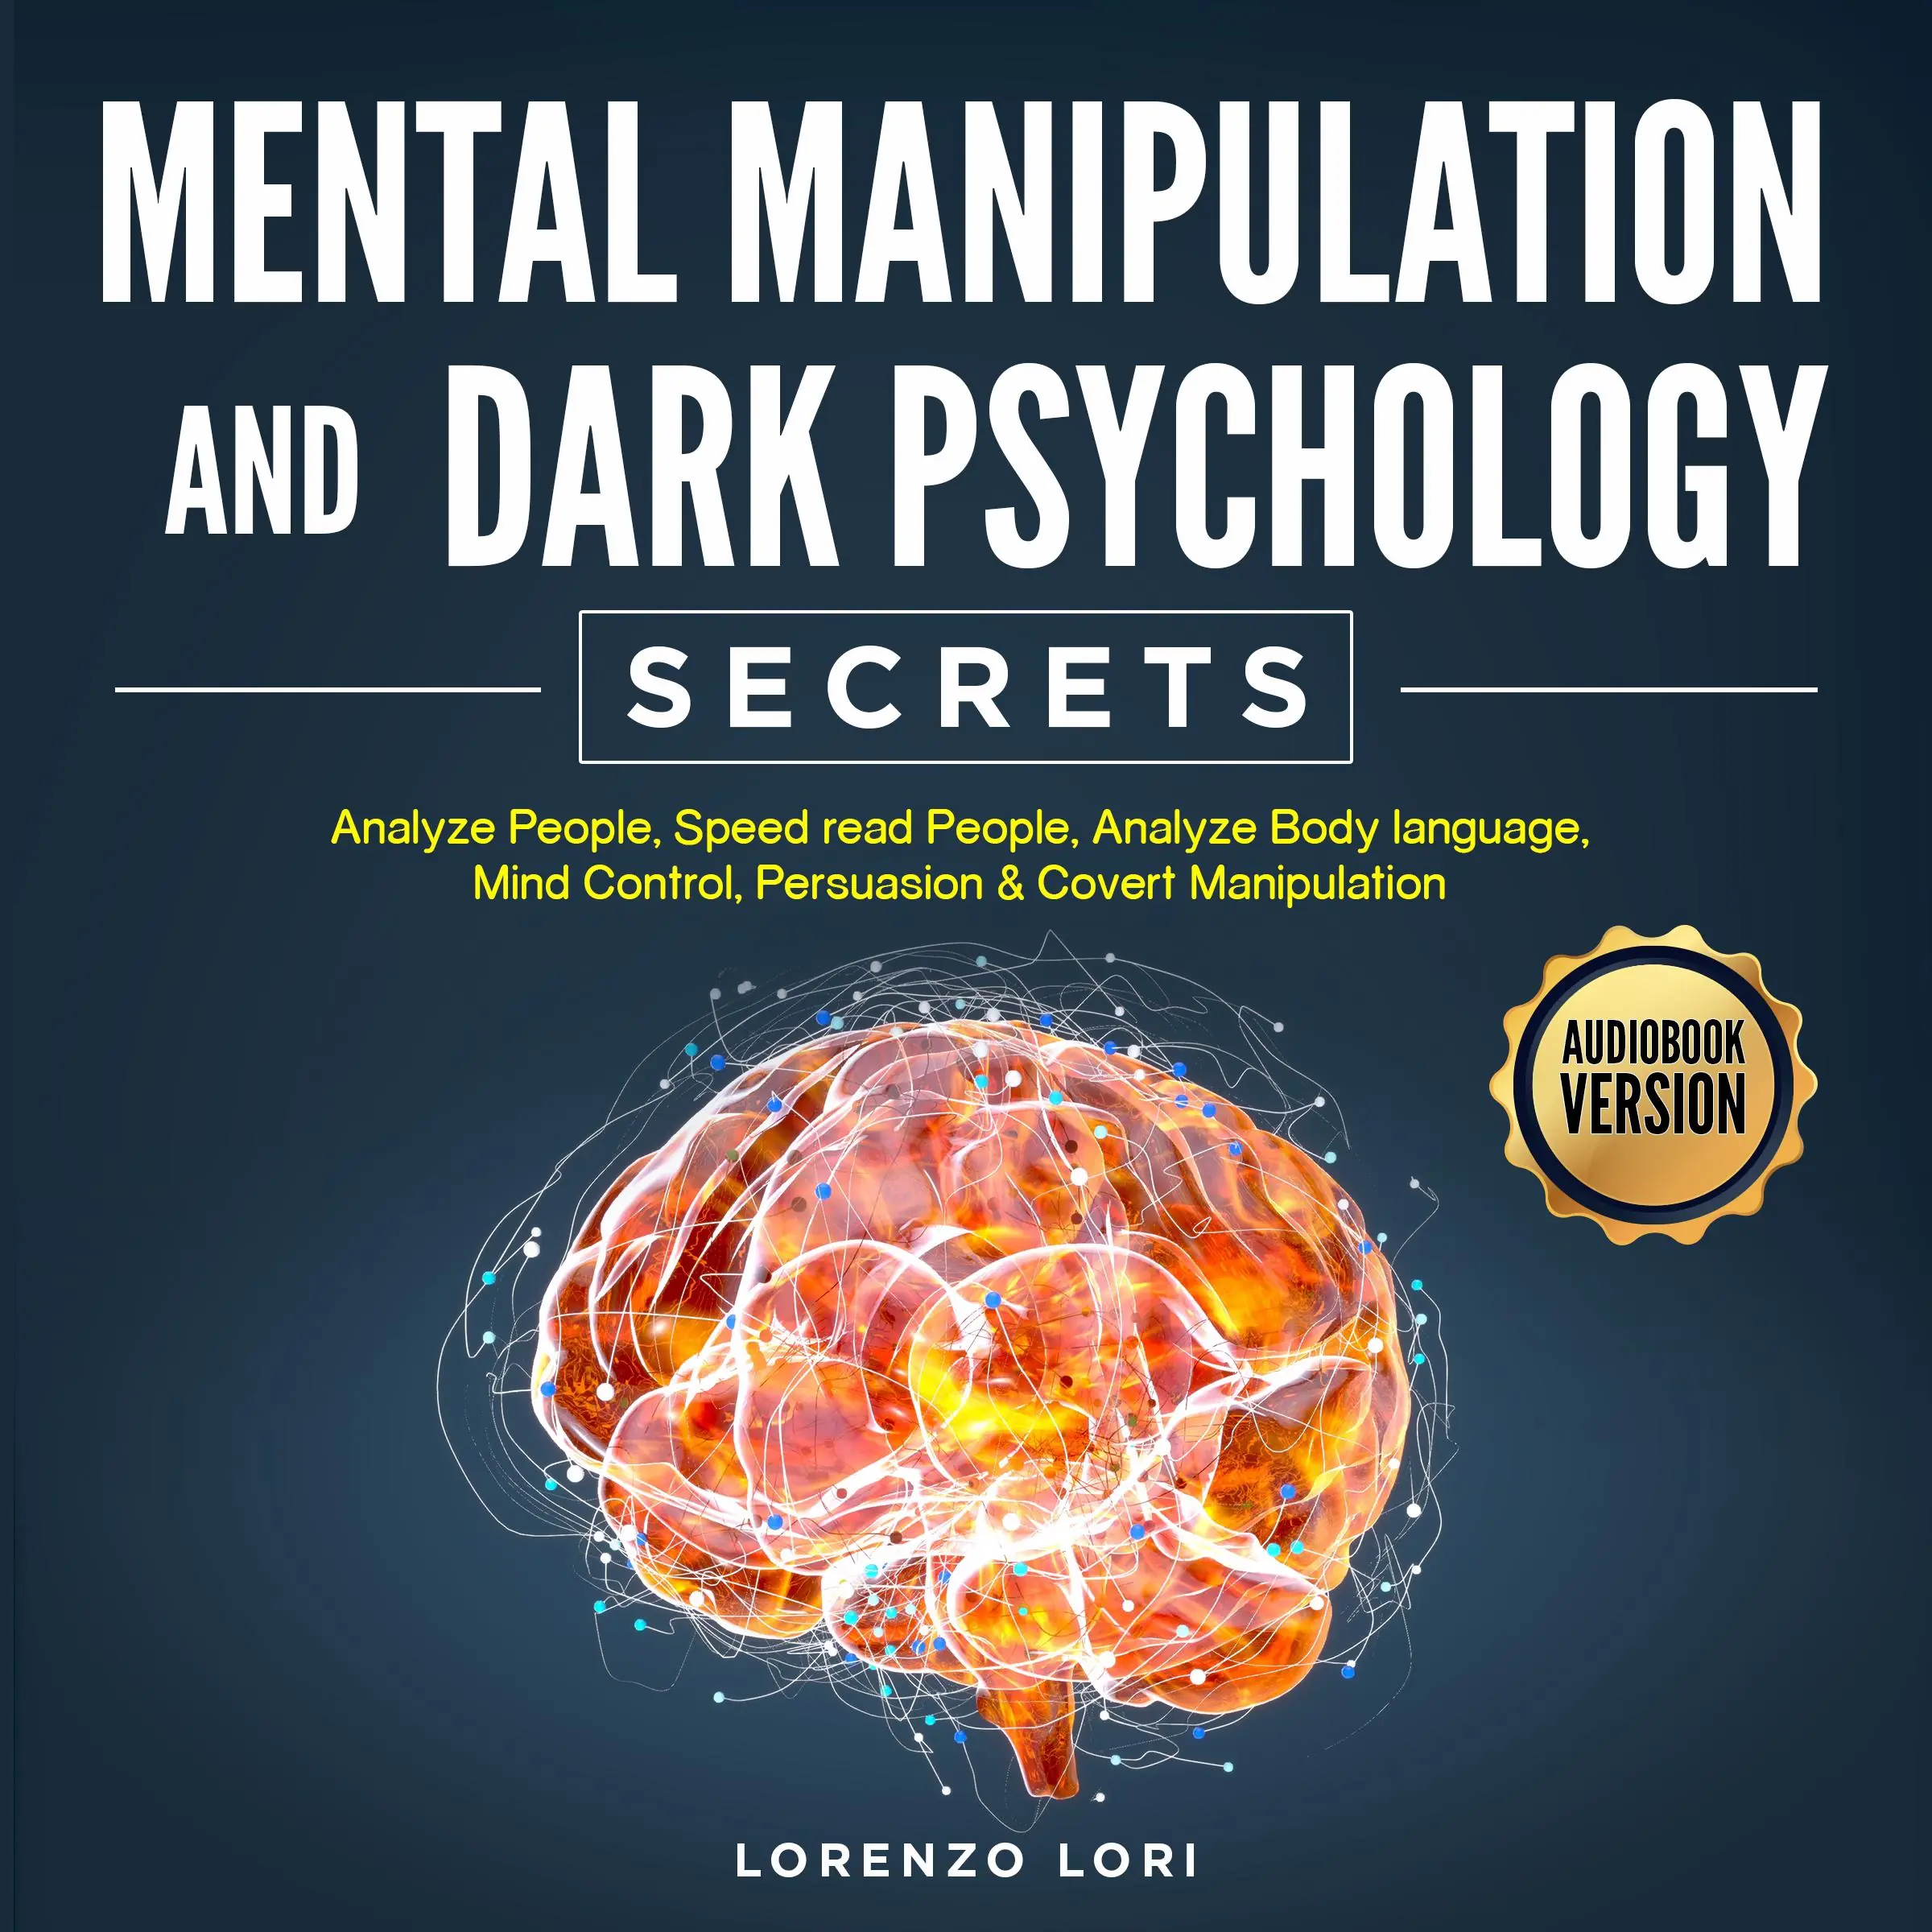 Mental Manipulation And Dark Psychology Secrets Audiobook by Lorenzo Lori